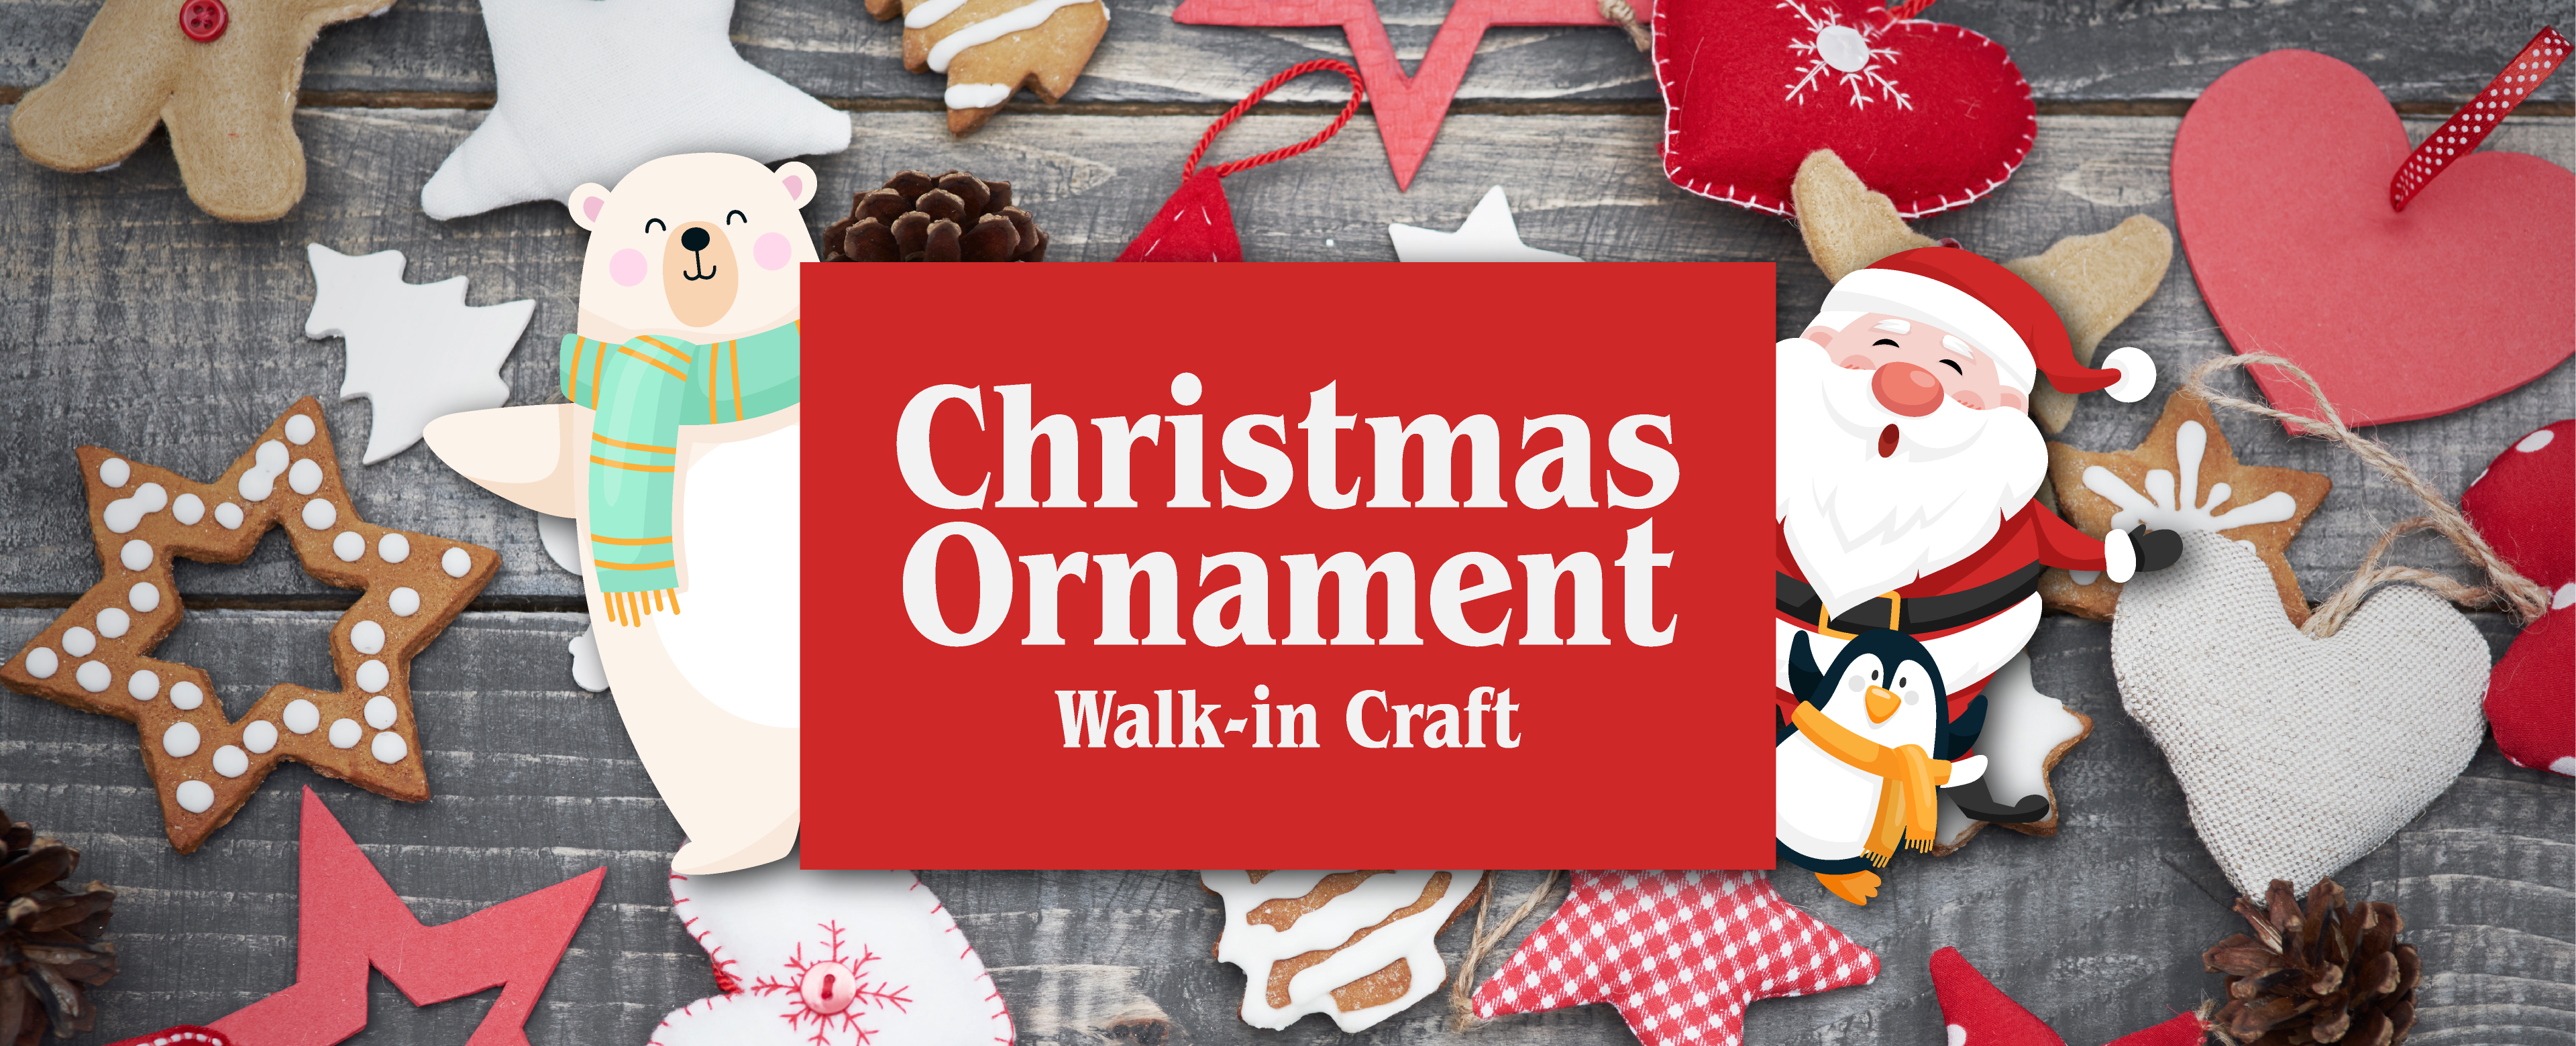 Christmas Ornament Walk-In Craft